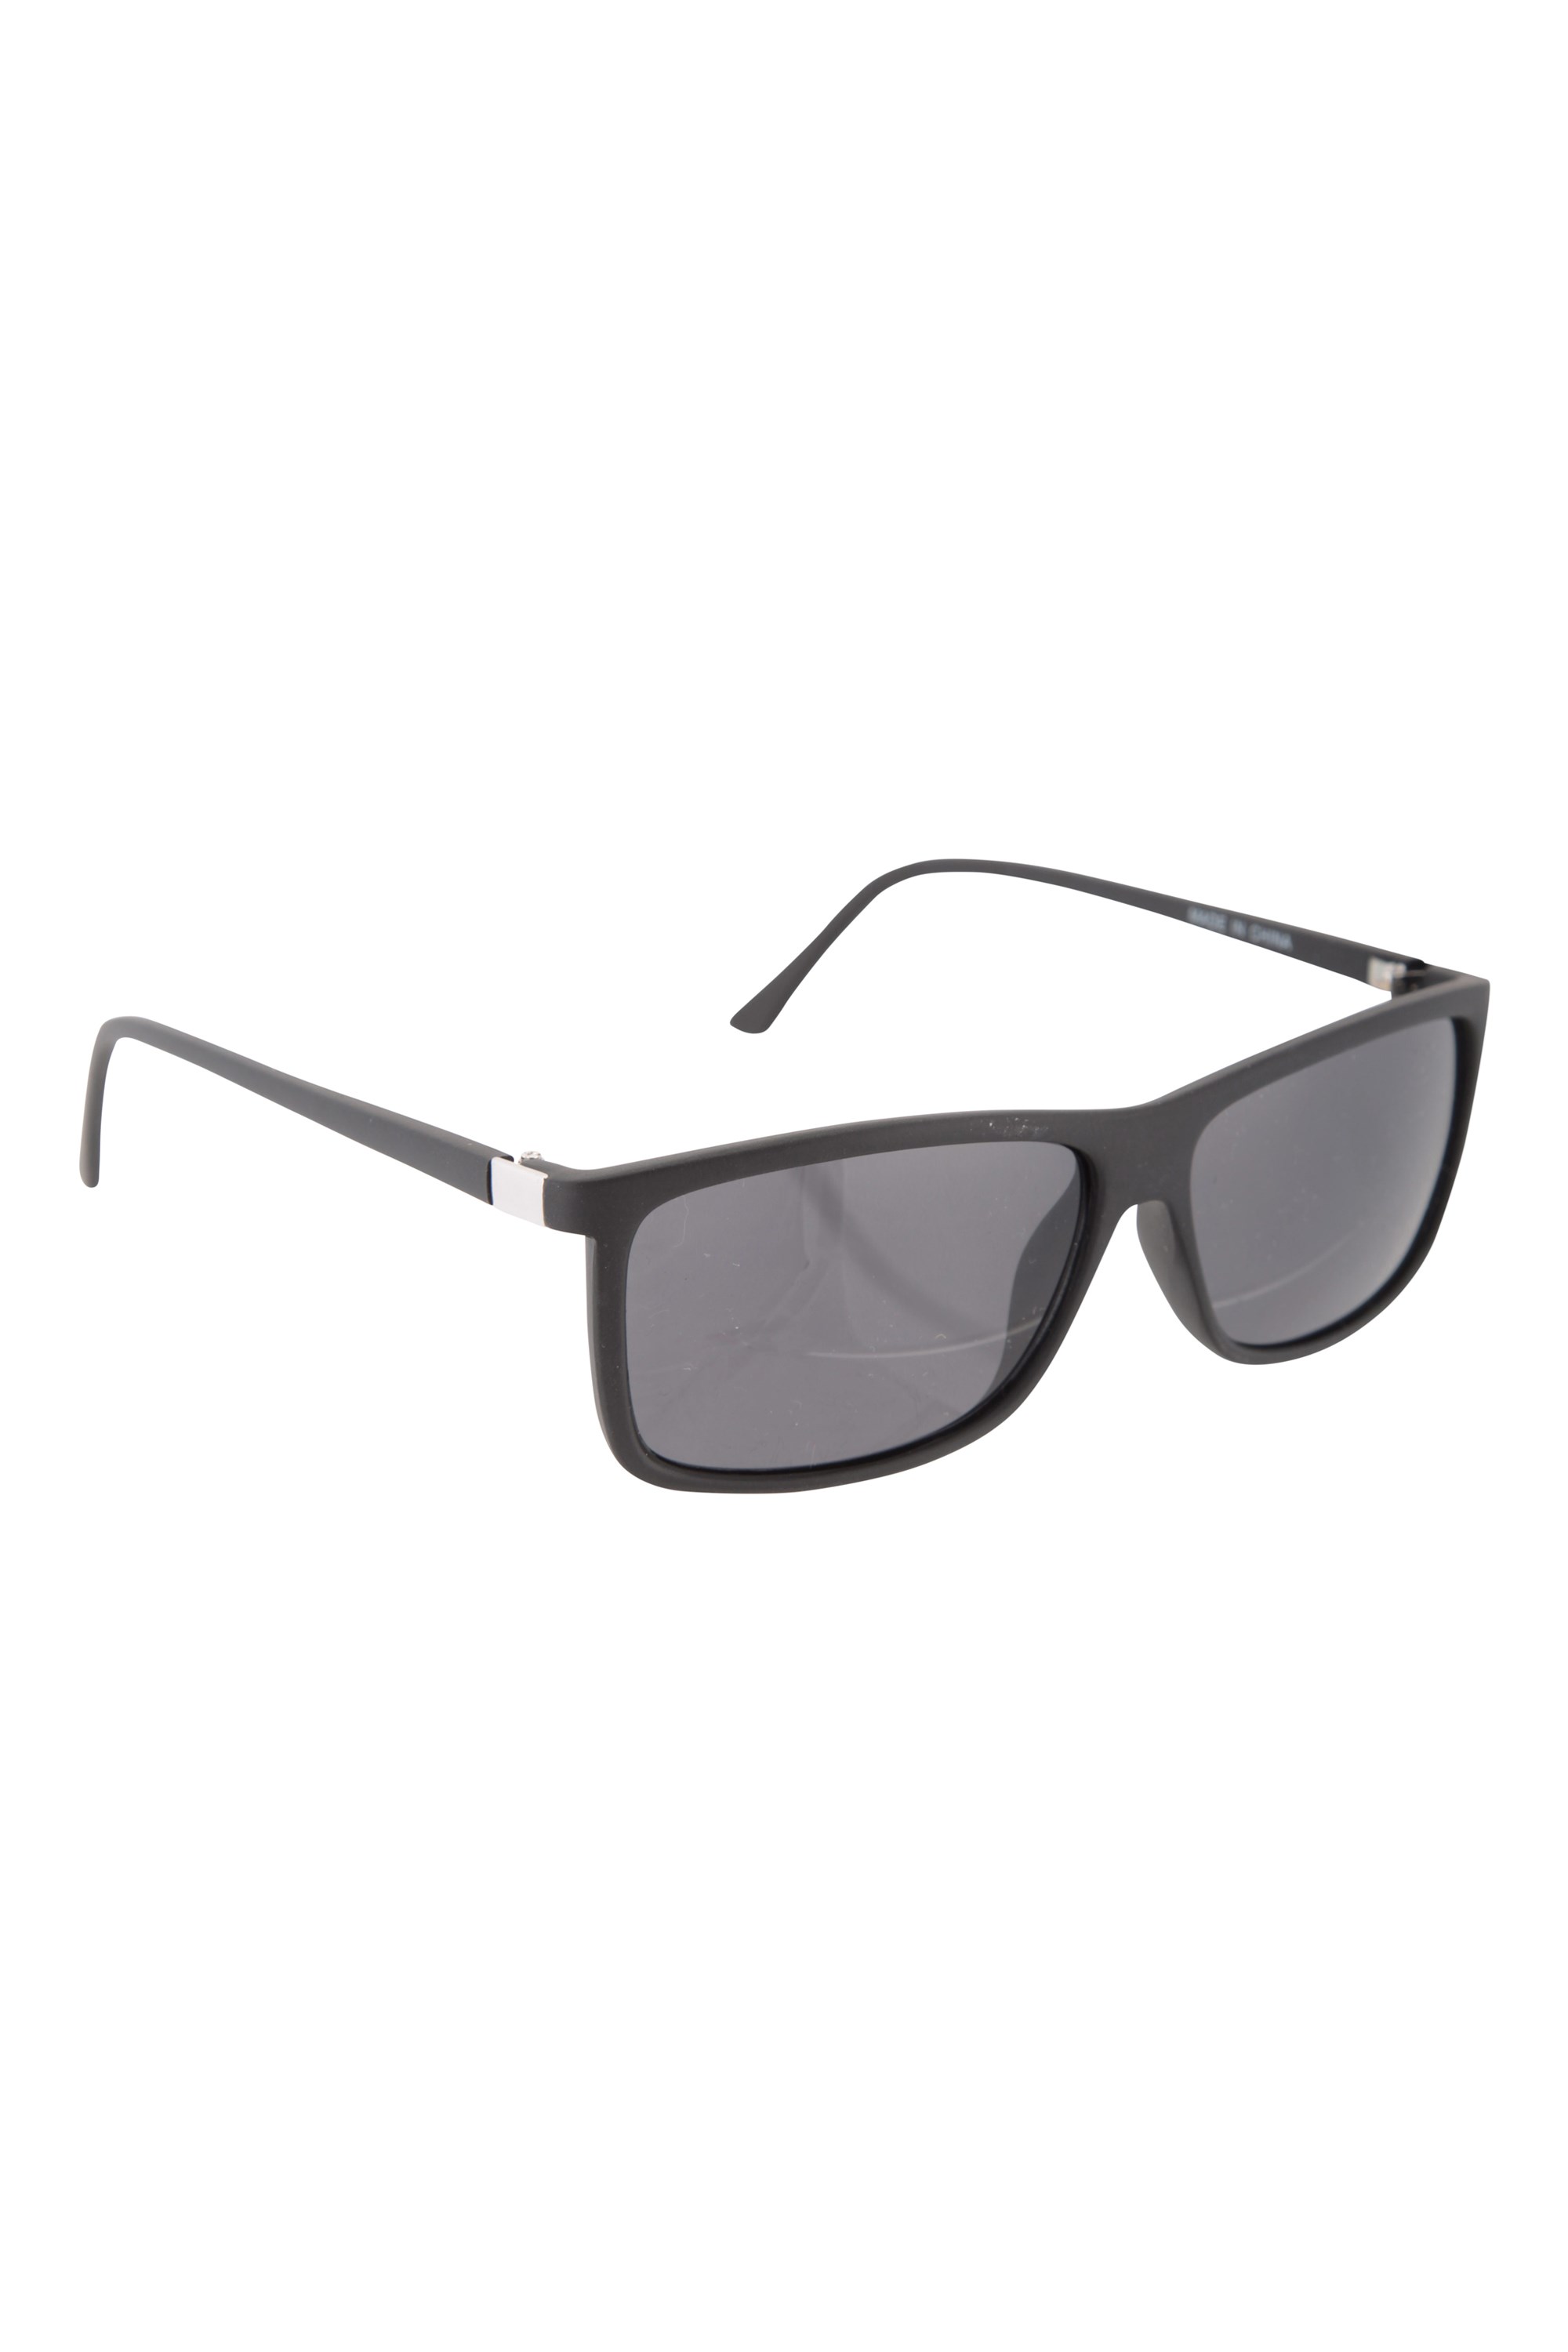 Porto Da Barra Sunglasses - Black